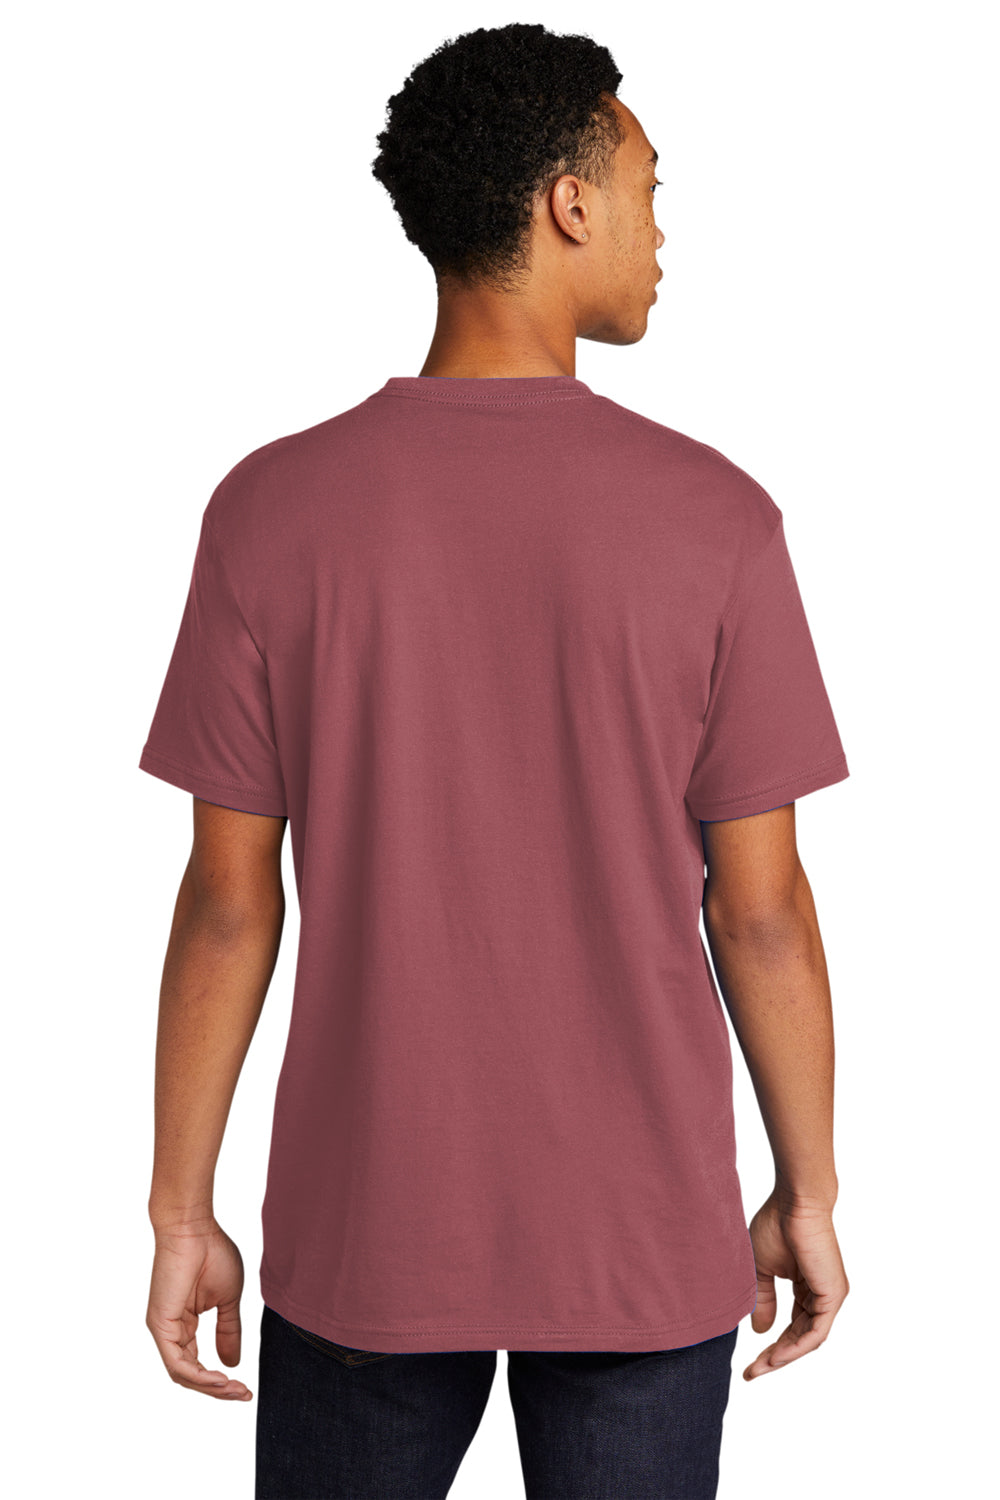 Next Level NL3600/3600 Mens Fine Jersey Short Sleeve Crewneck T-Shirt Mauve Back